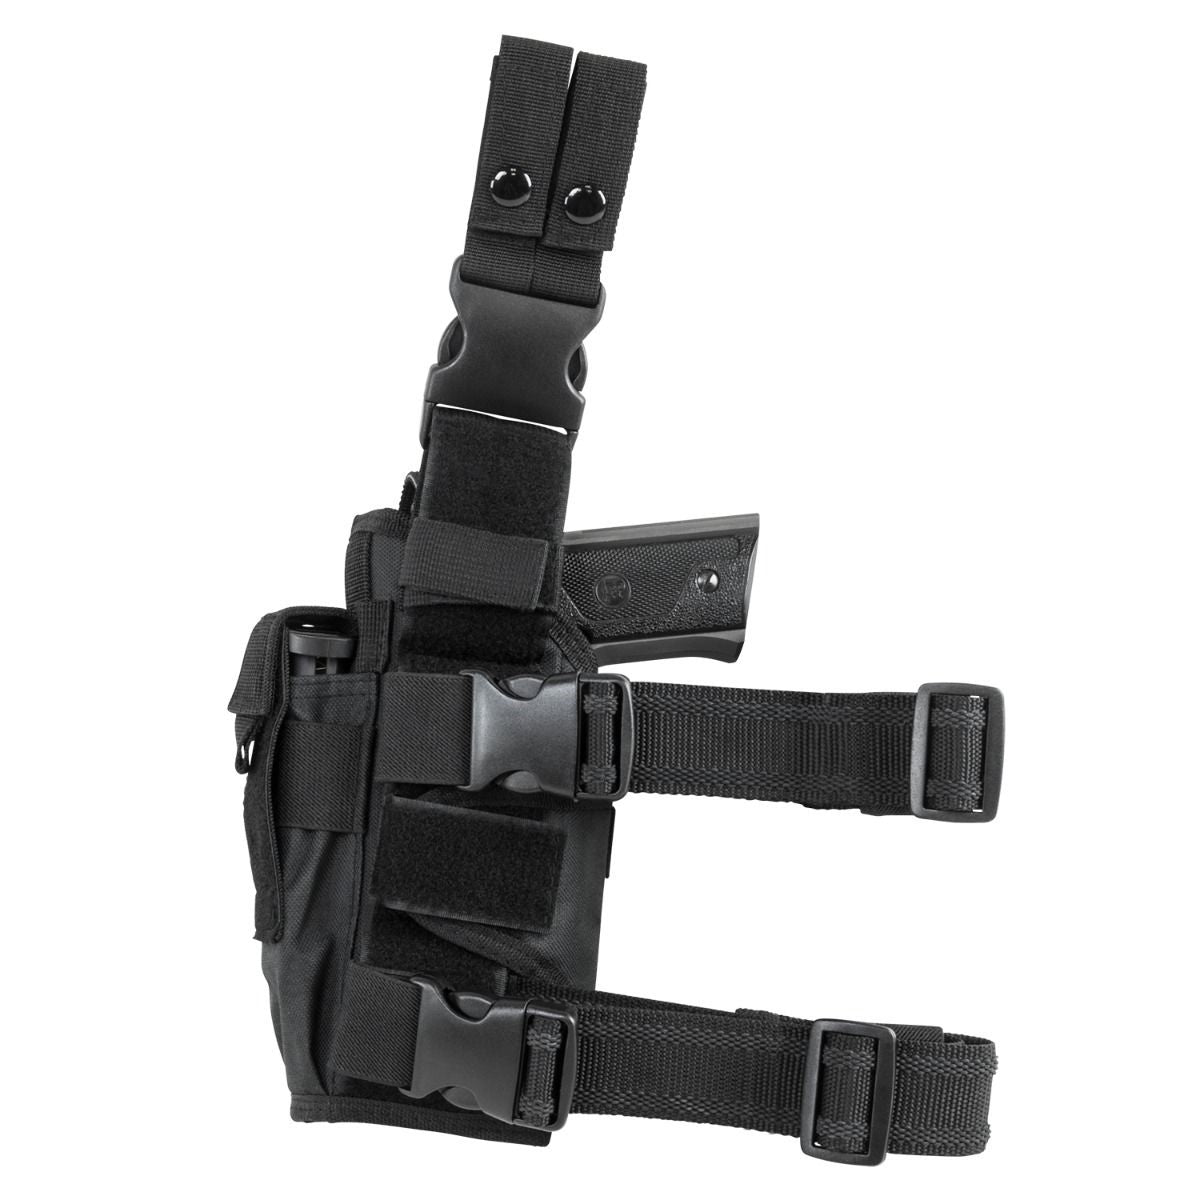 Trinity Tactical Adjustable Leg Holster Black Security Law Enforcement Home Defense Gear.